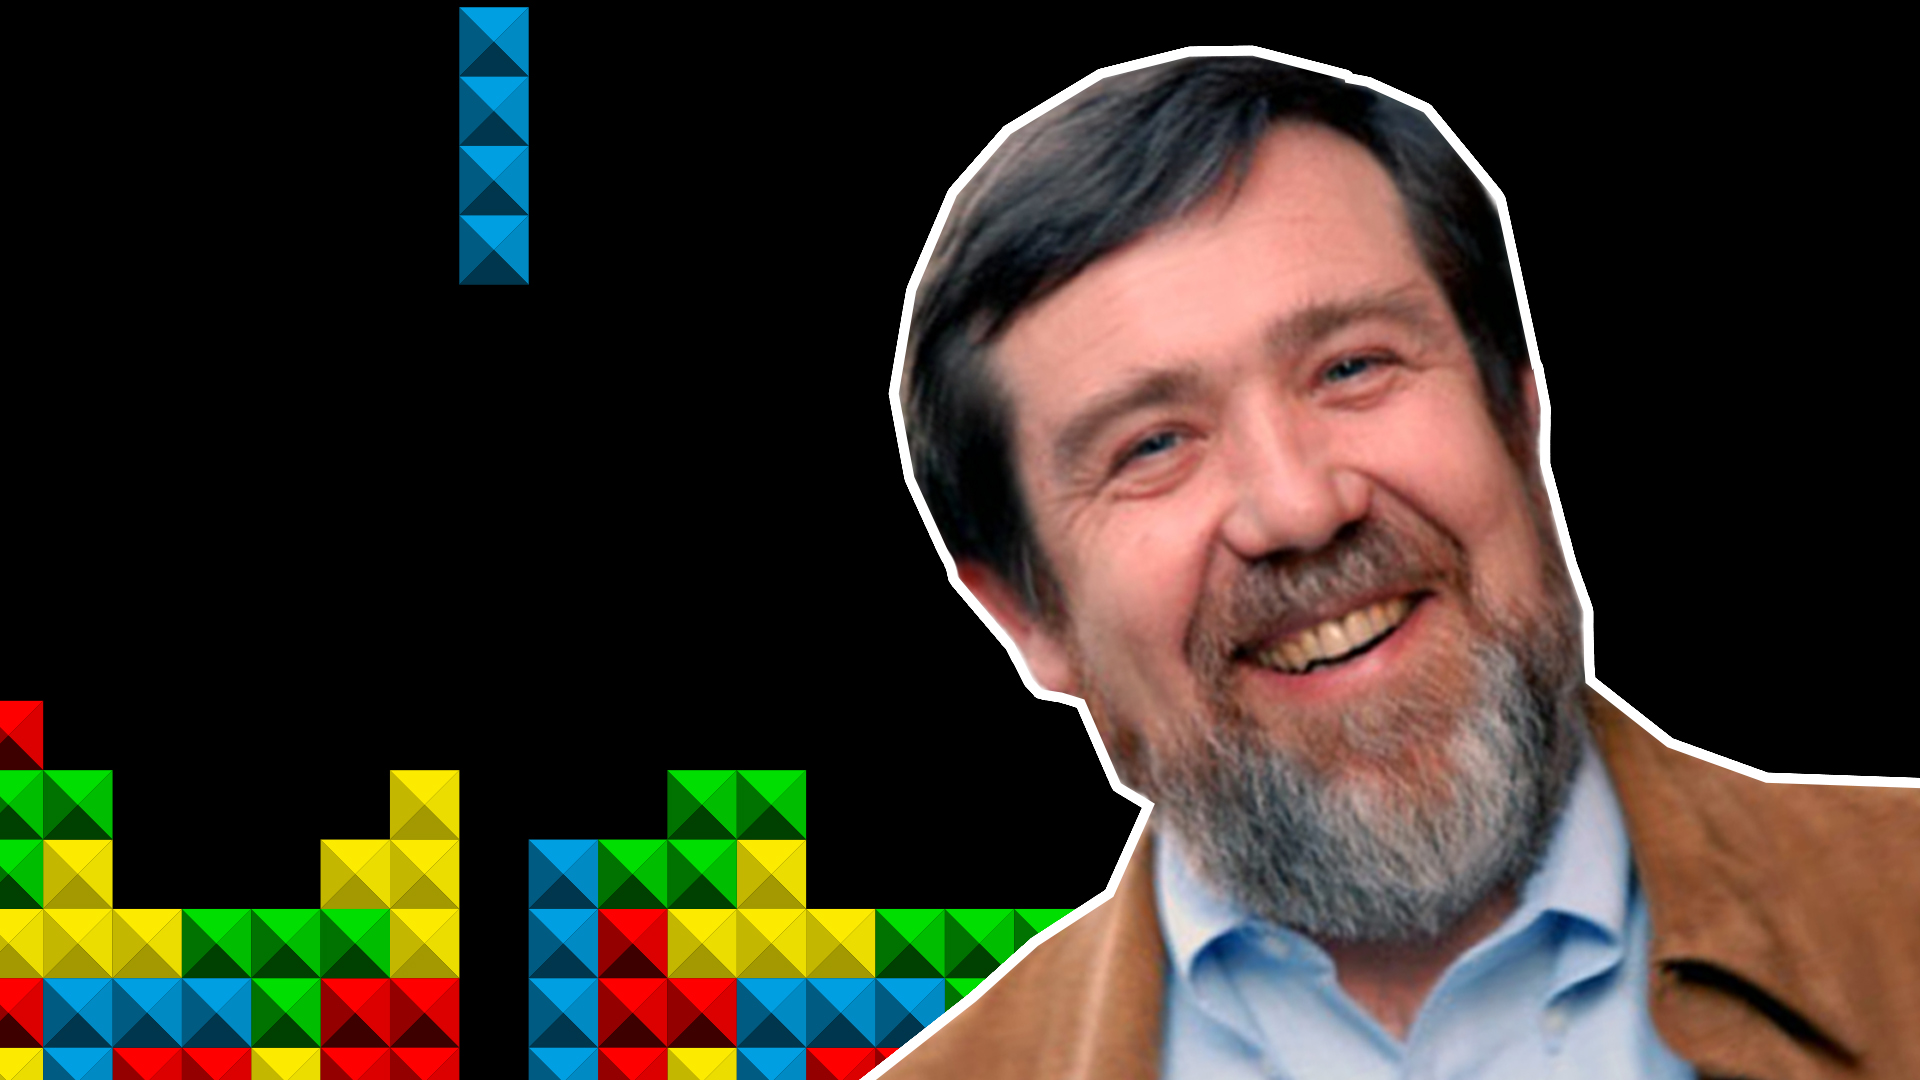 Tetris creator Alexey Pajitnov